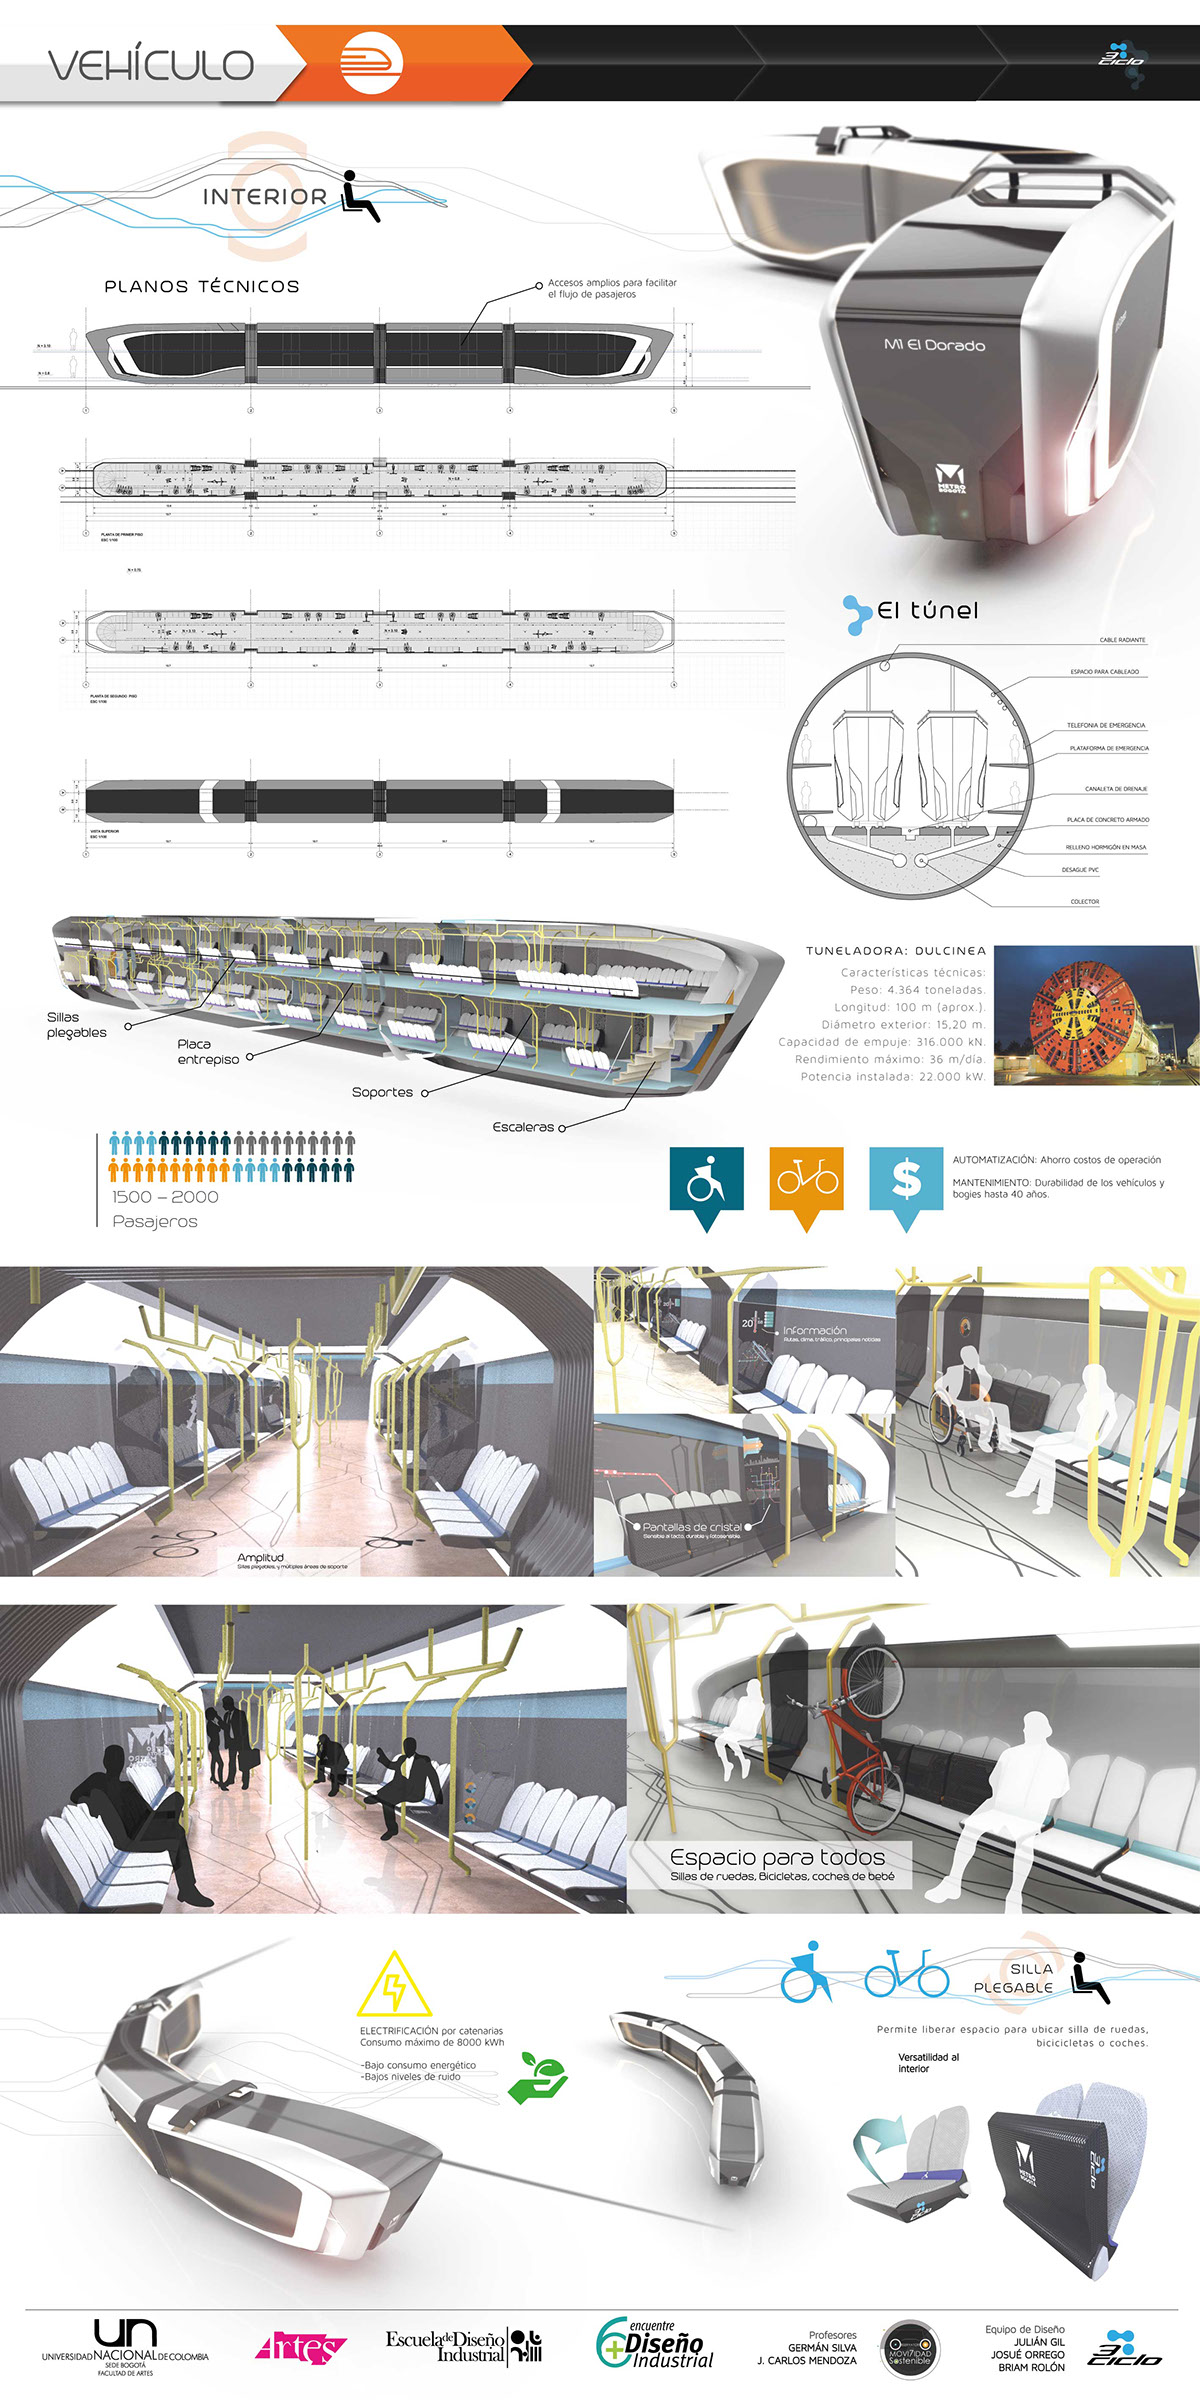 UNAL train metro Rail Way Car bogota subway concept future transportation underground